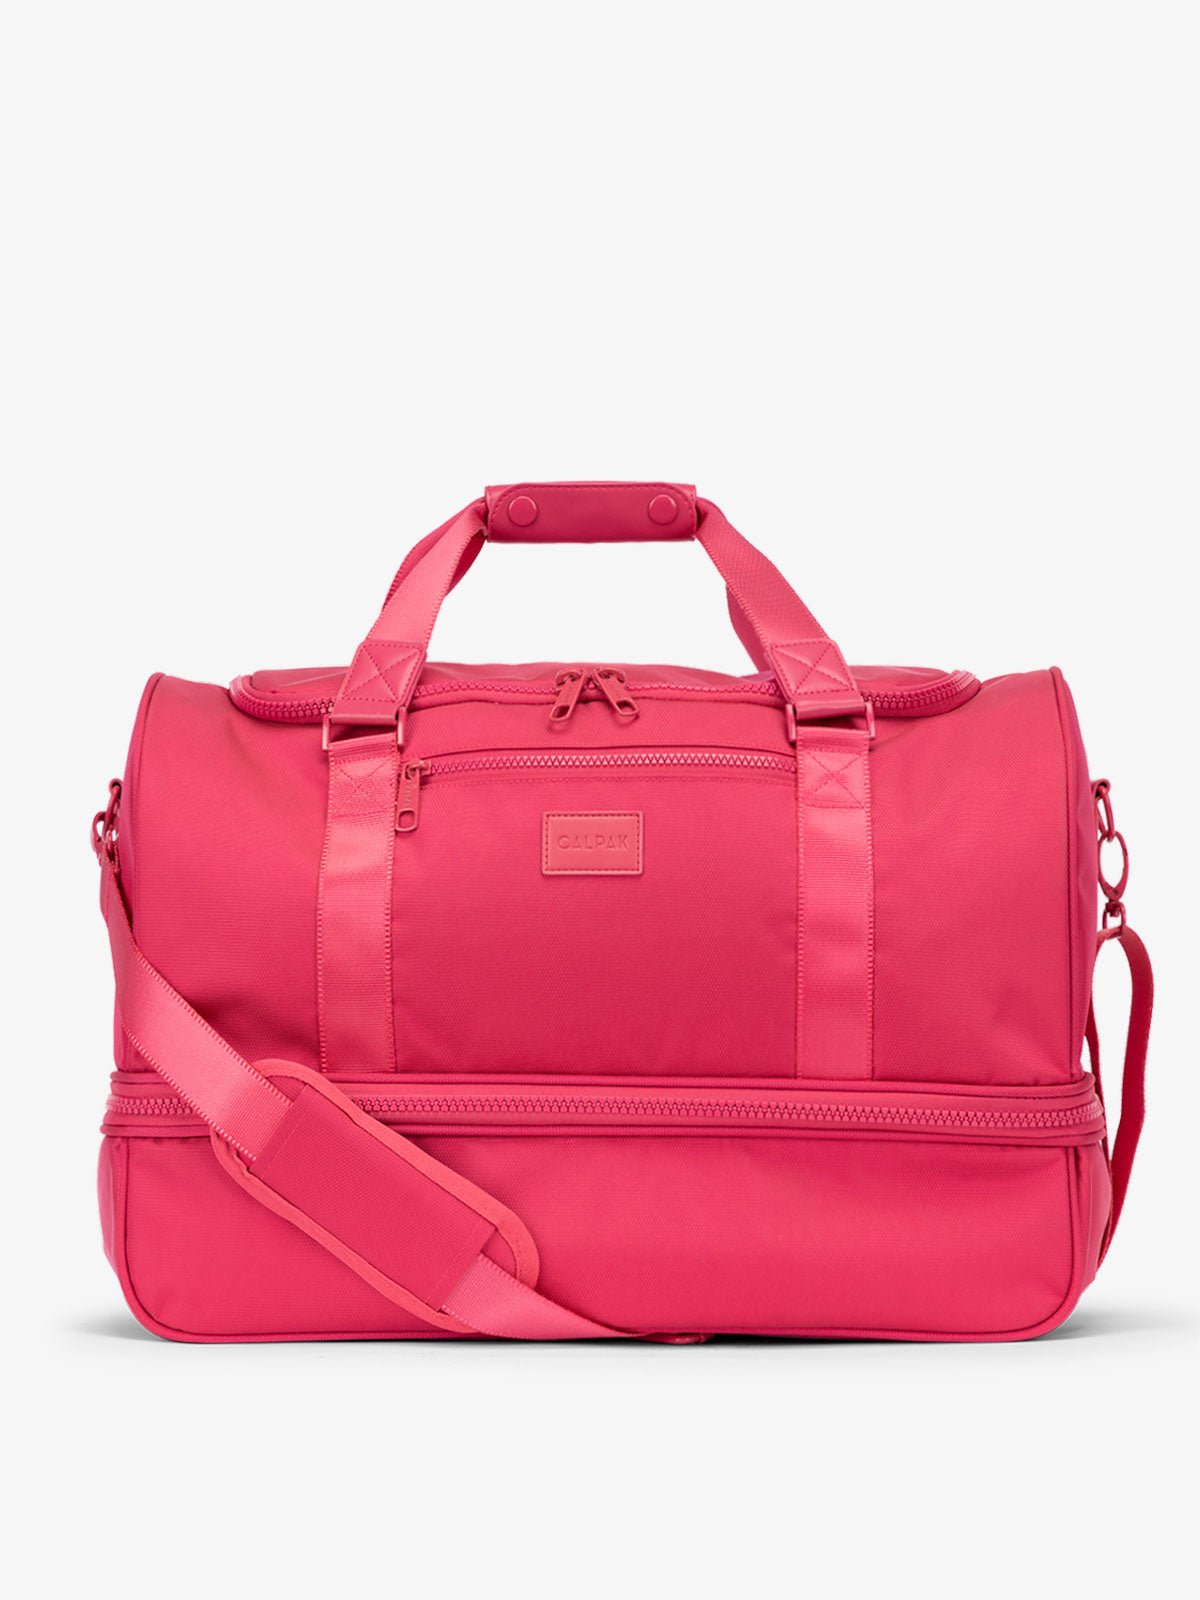 CALPAK Stevyn Duffel bag with removable crossbody strap in pink dragonfruit